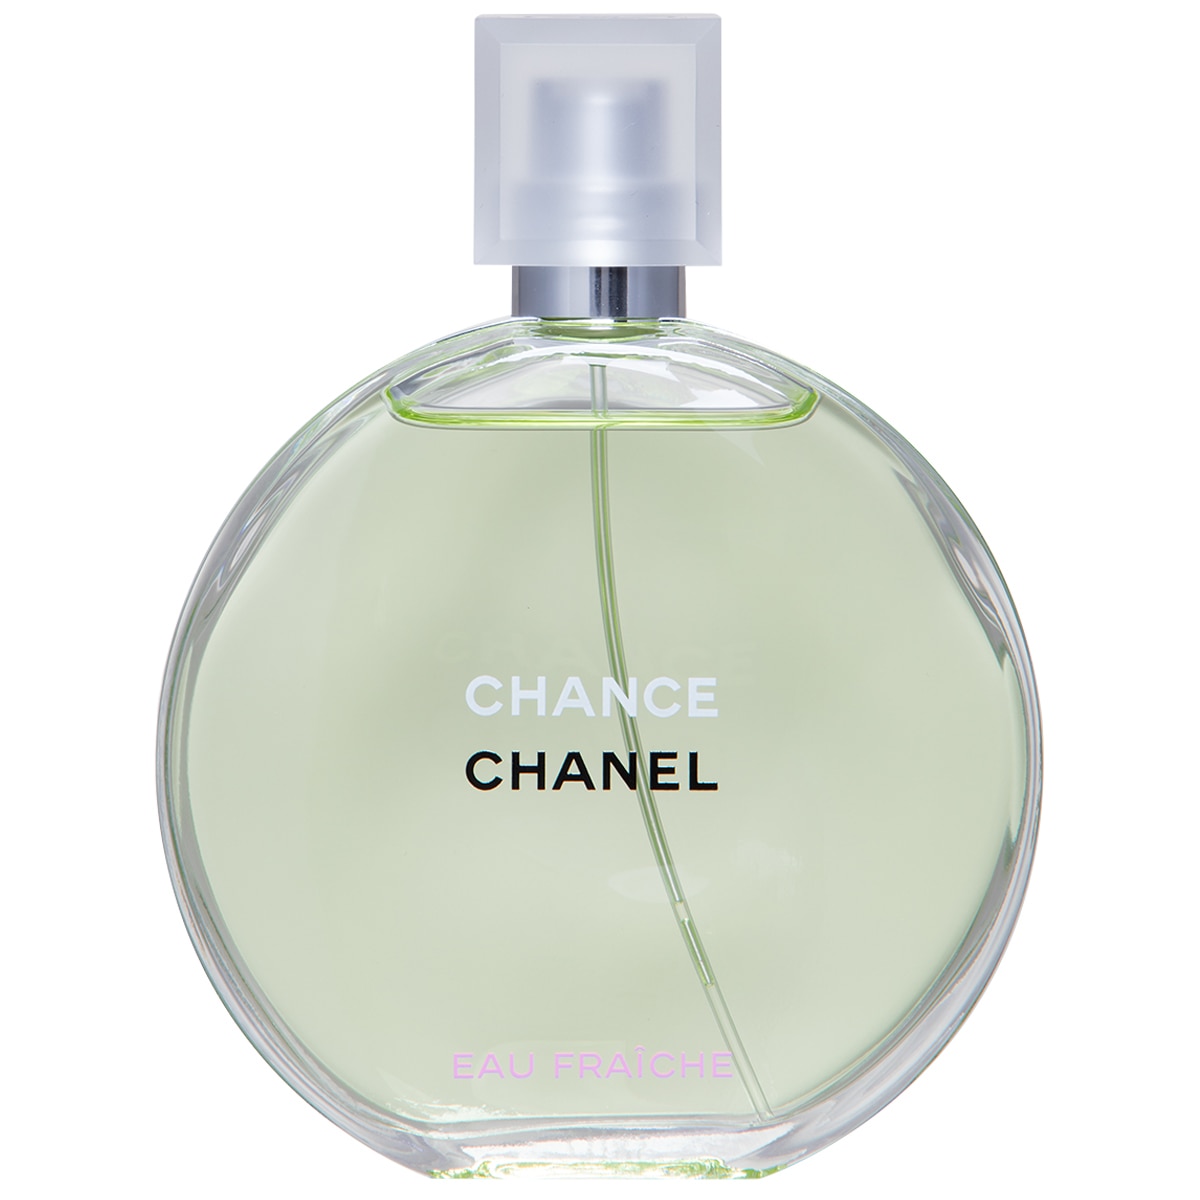 Chanel Chance Eau Fraiche Eau de Toilette 100ml | Costco Australia